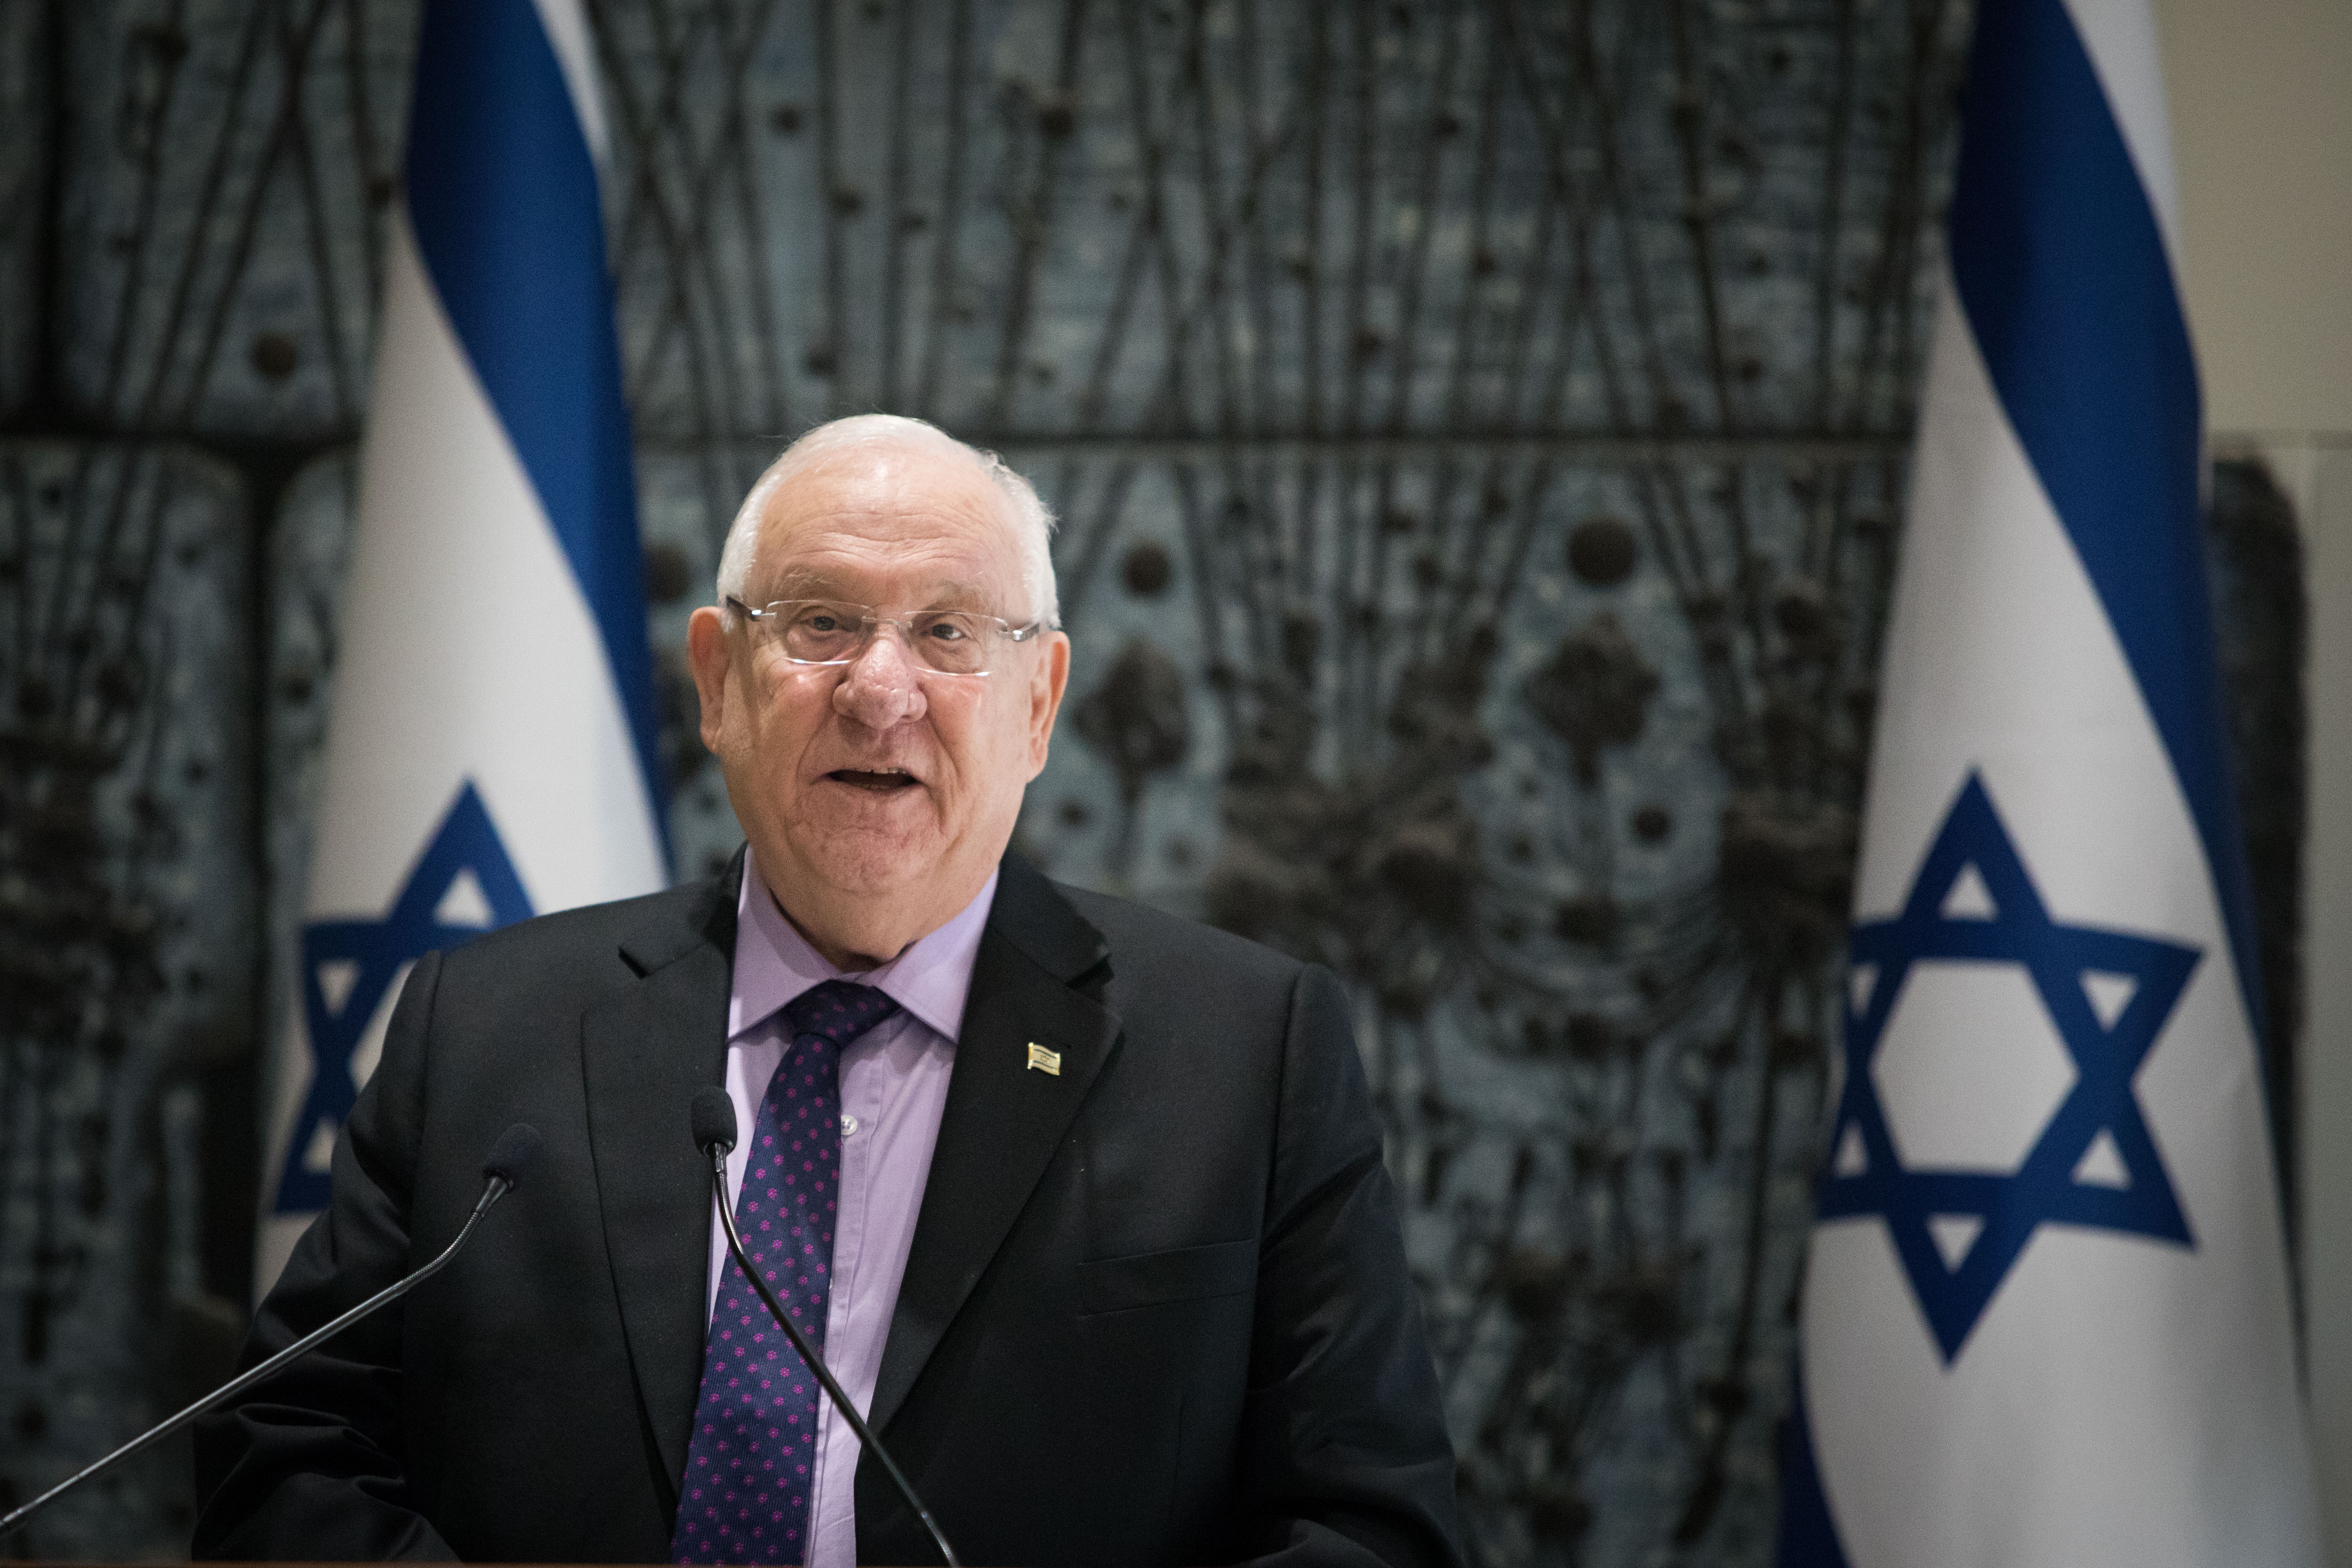 Israeli President Rivlin set to call on Netanyahu to form next unity